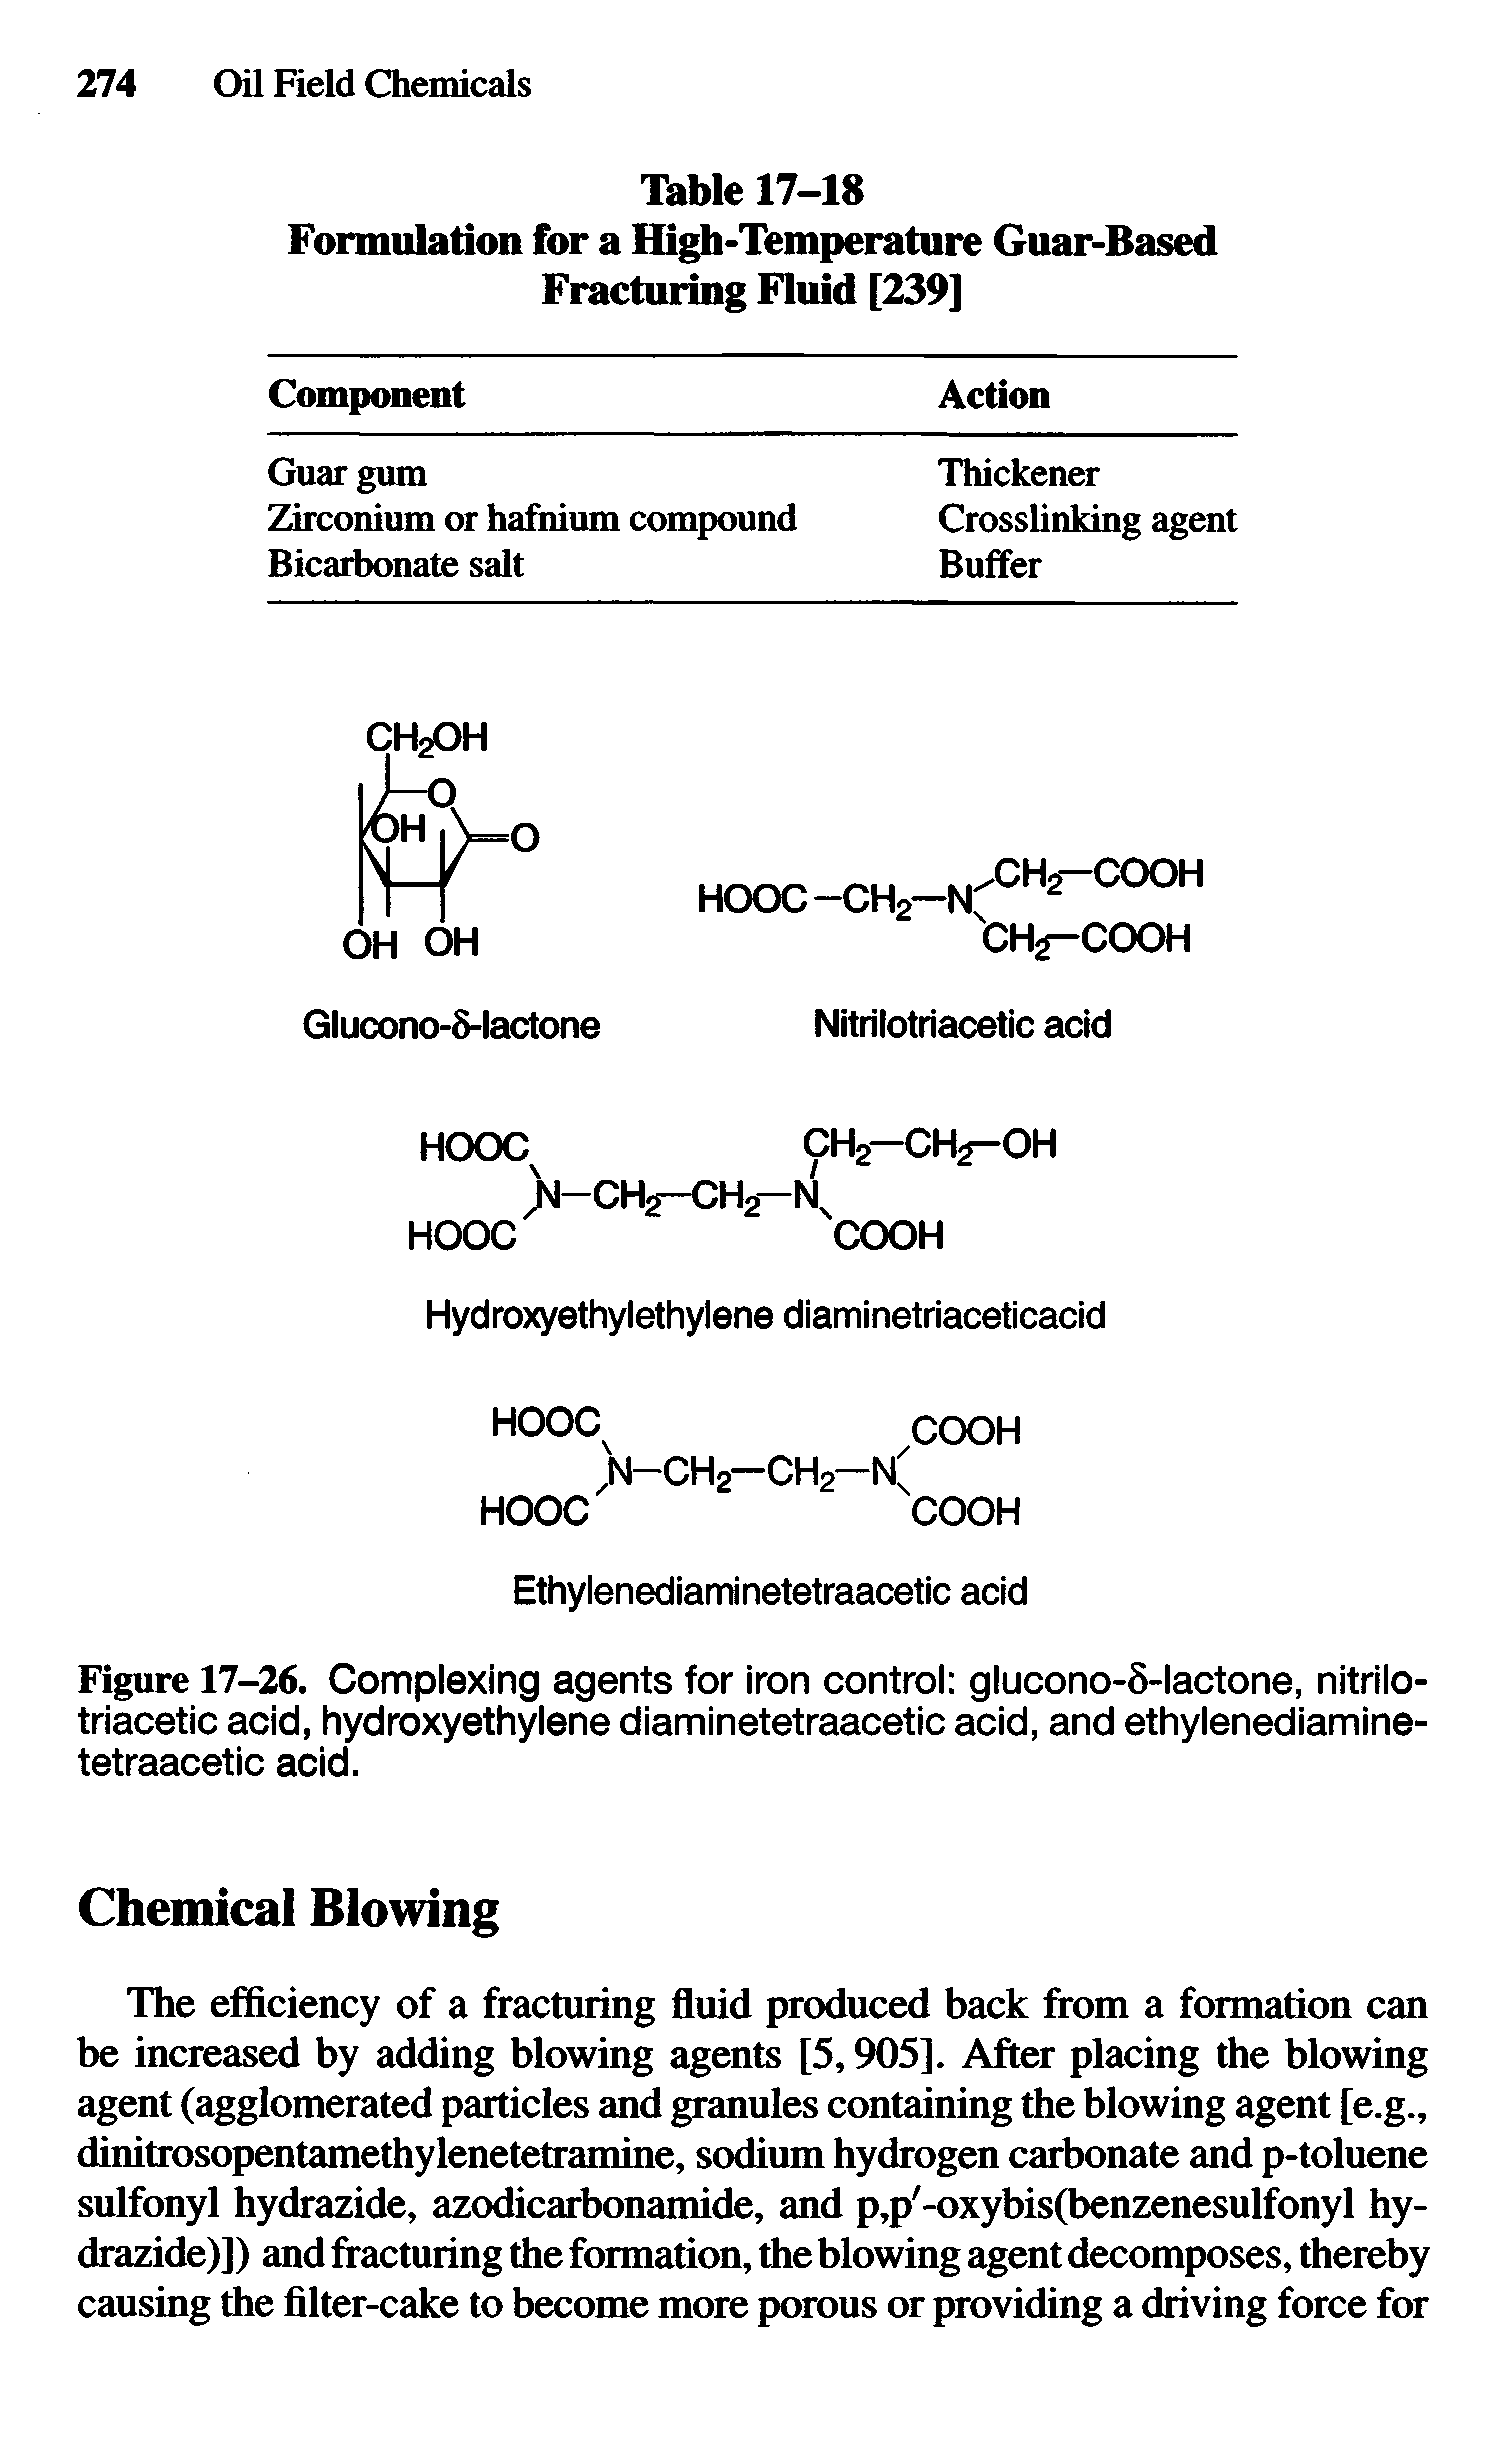 Figure 17-26. Complexing agents for iron control glucono-6-lactone, nitrilotriacetic acid, hydroxyethylene diaminetetraacetic acid, and ethylenediaminetetraacetic acid.